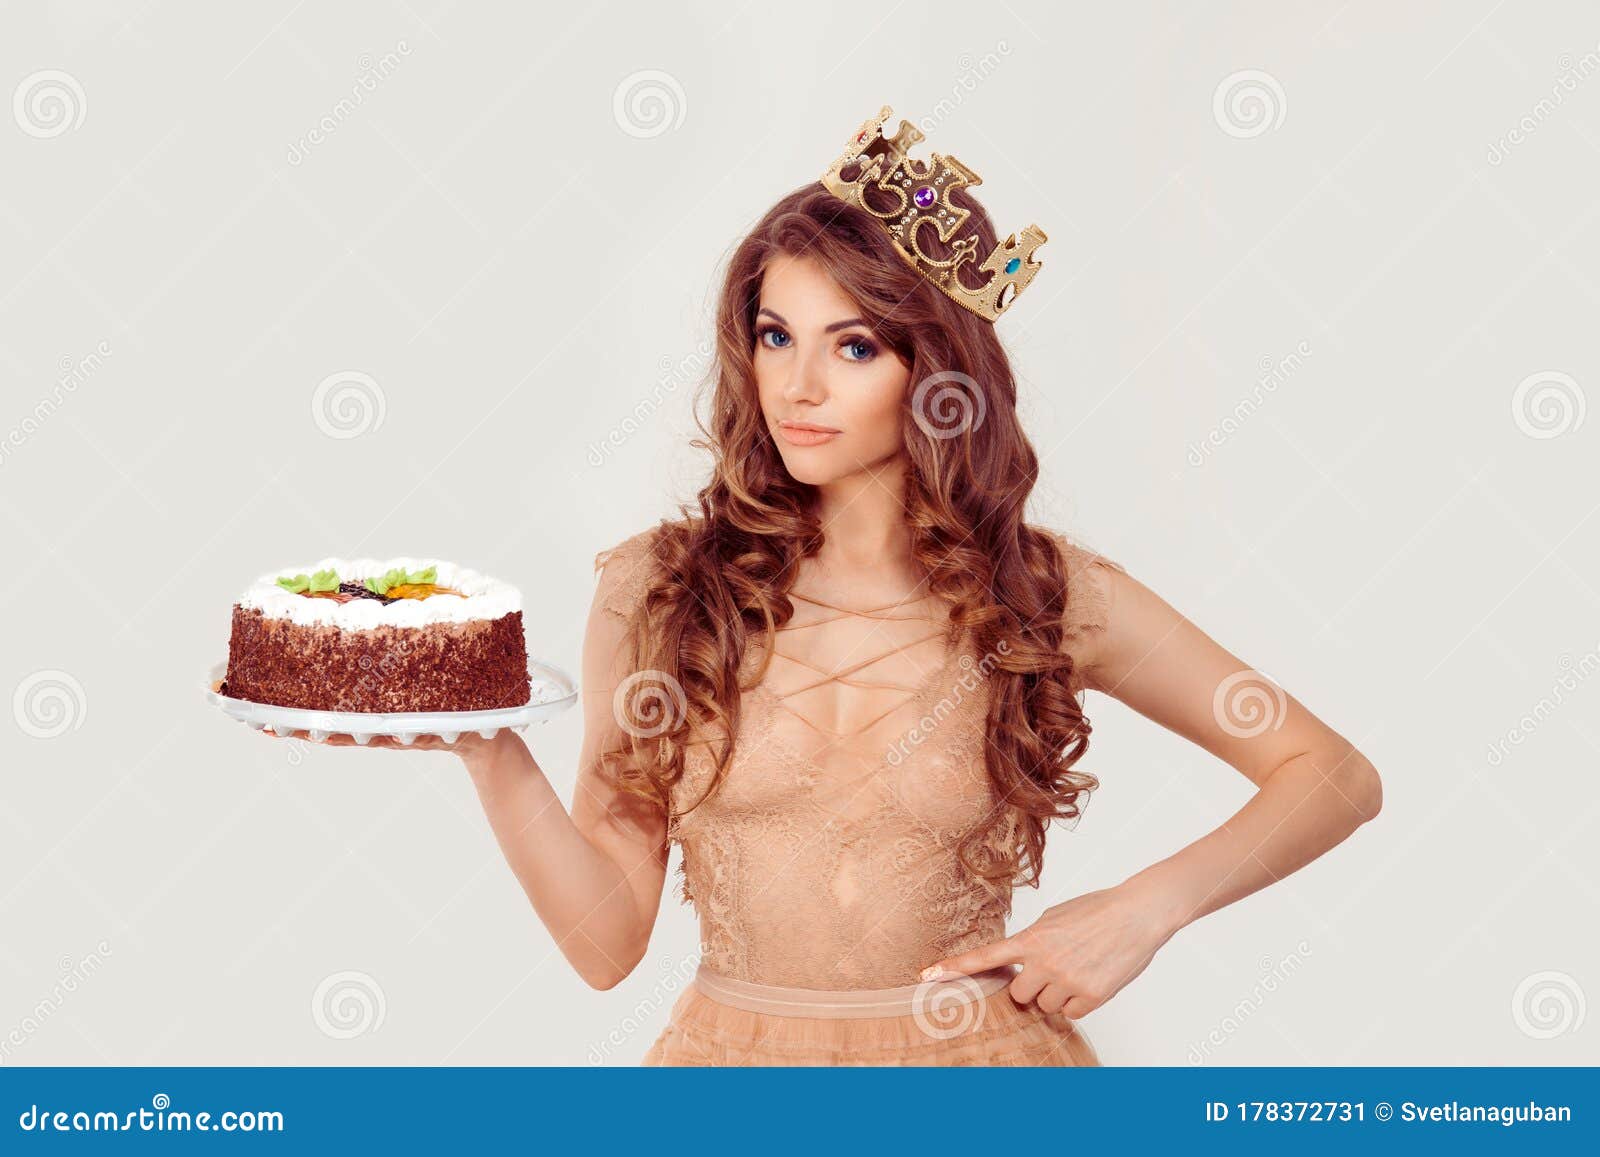 naked girl with birthday cake photo